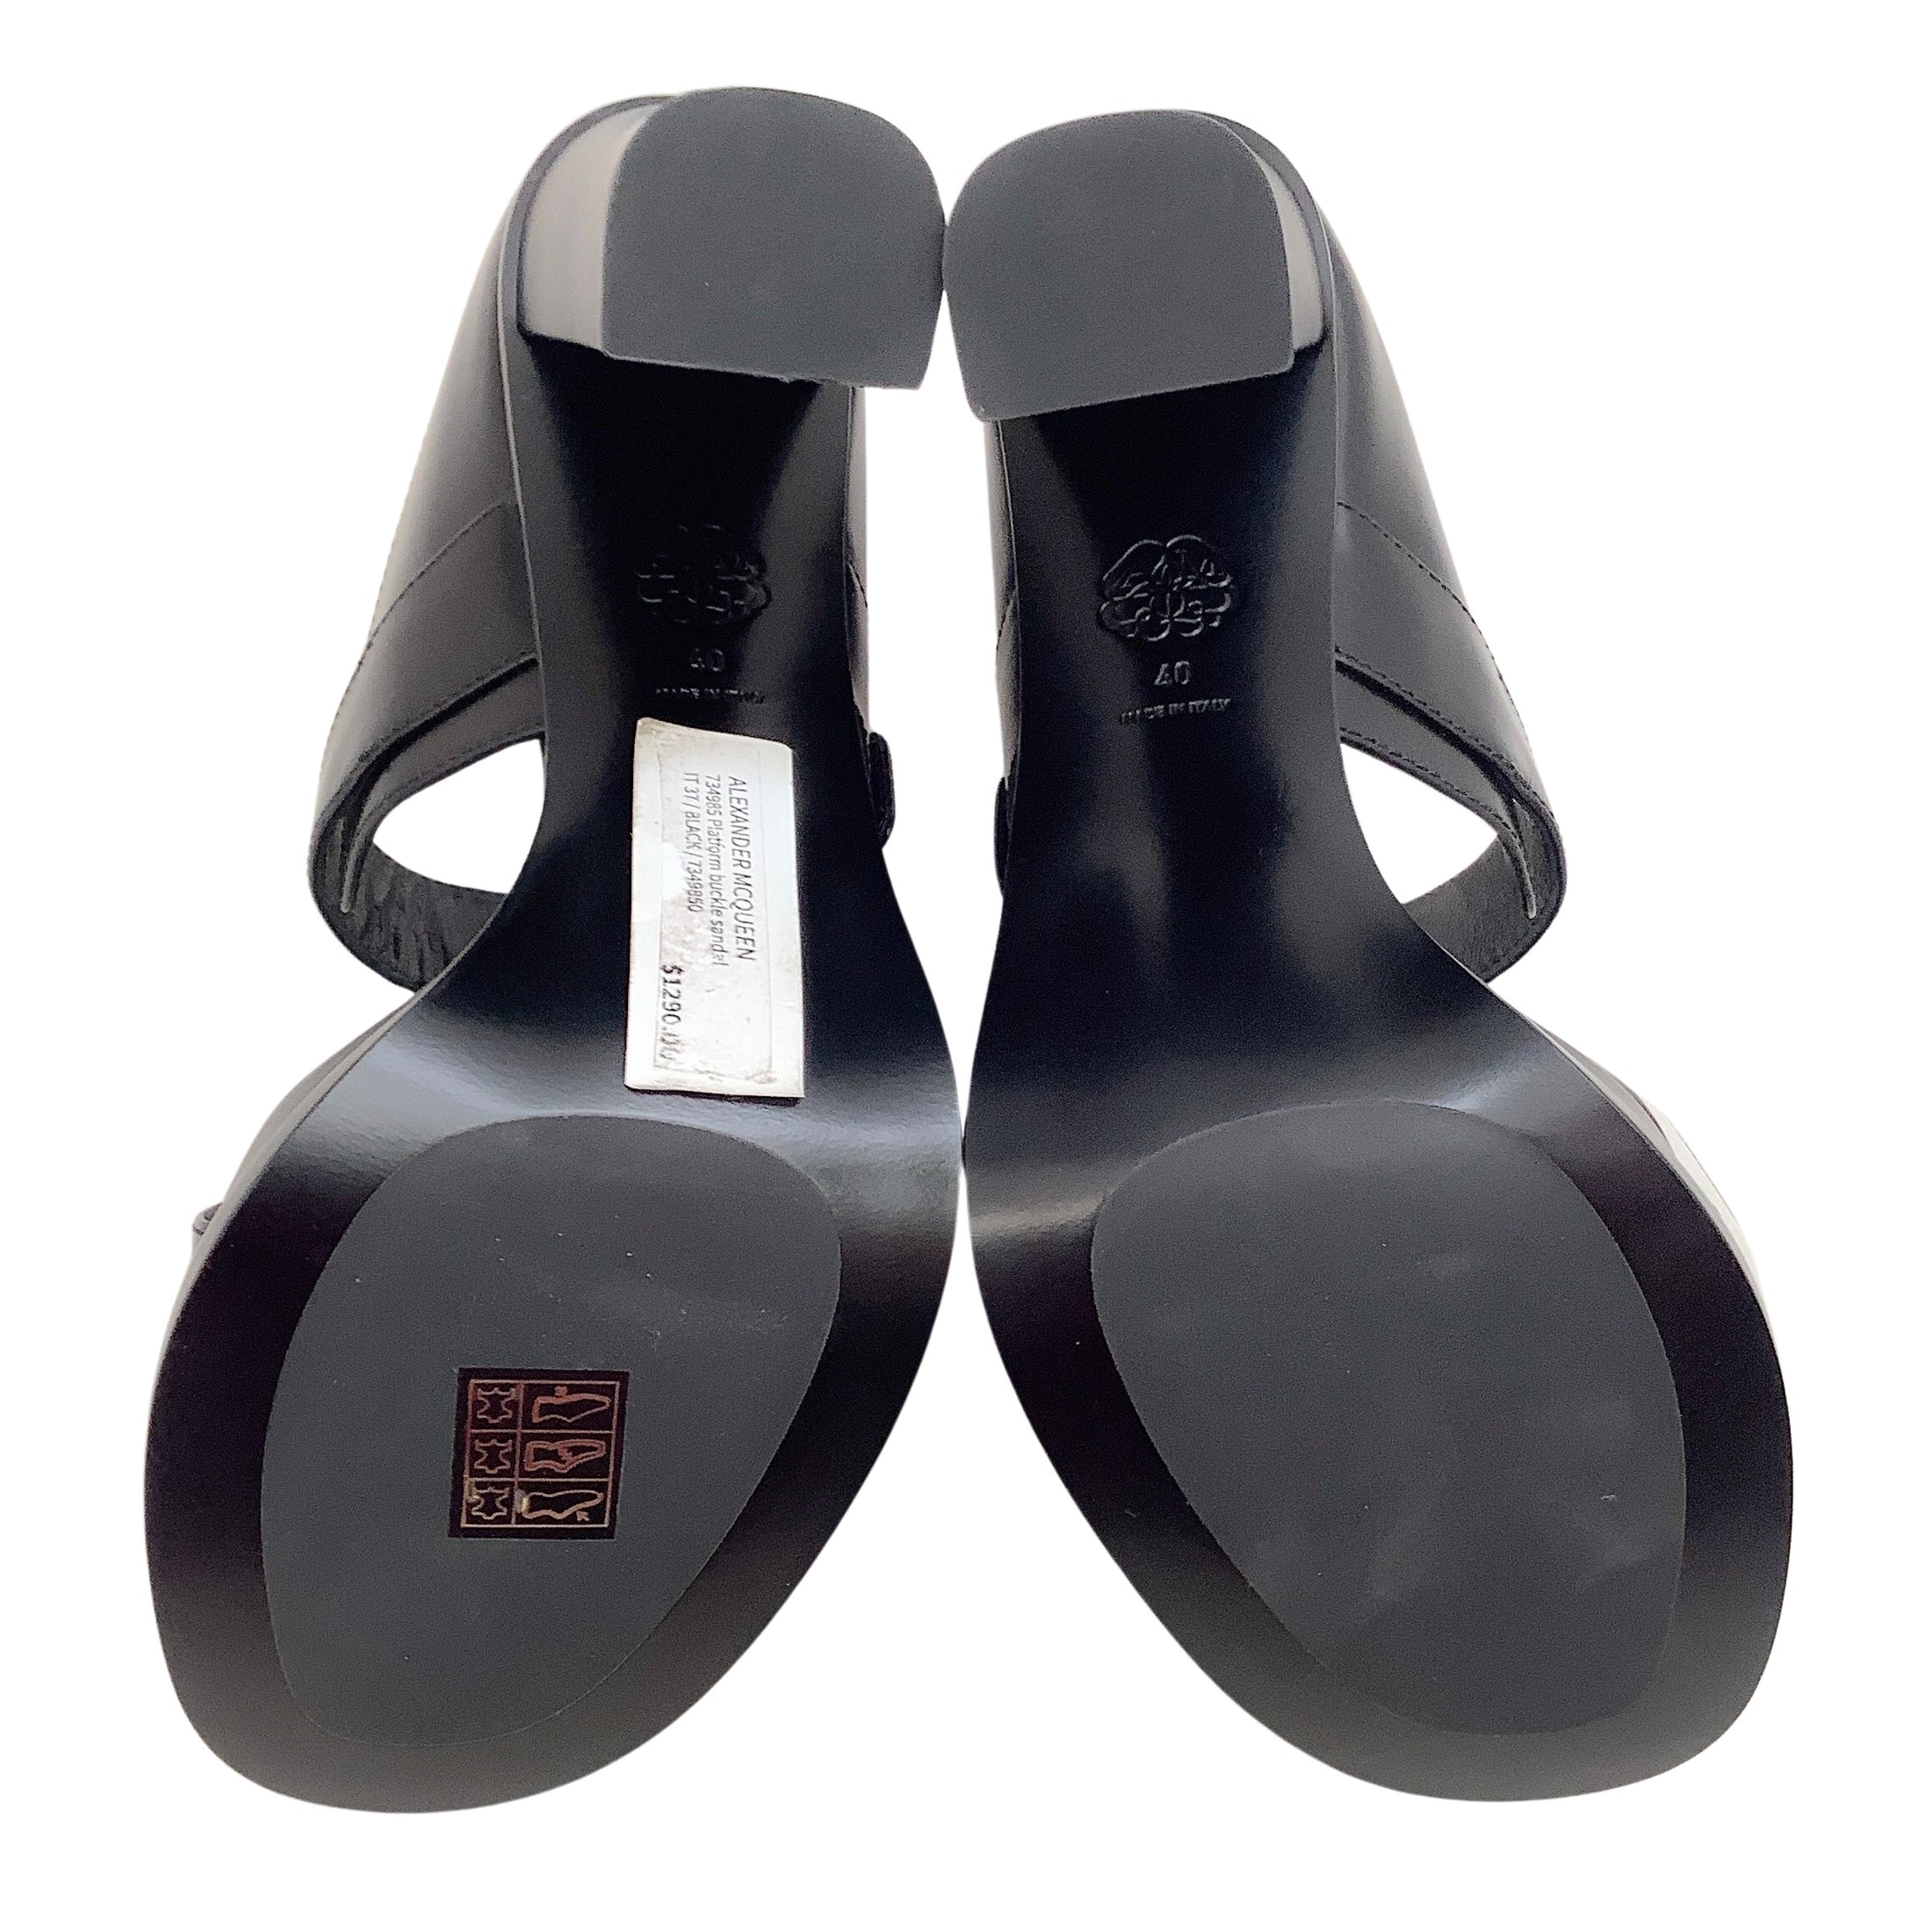 Alexander McQueen Black Leather Platform Sandals with Silver Buckles